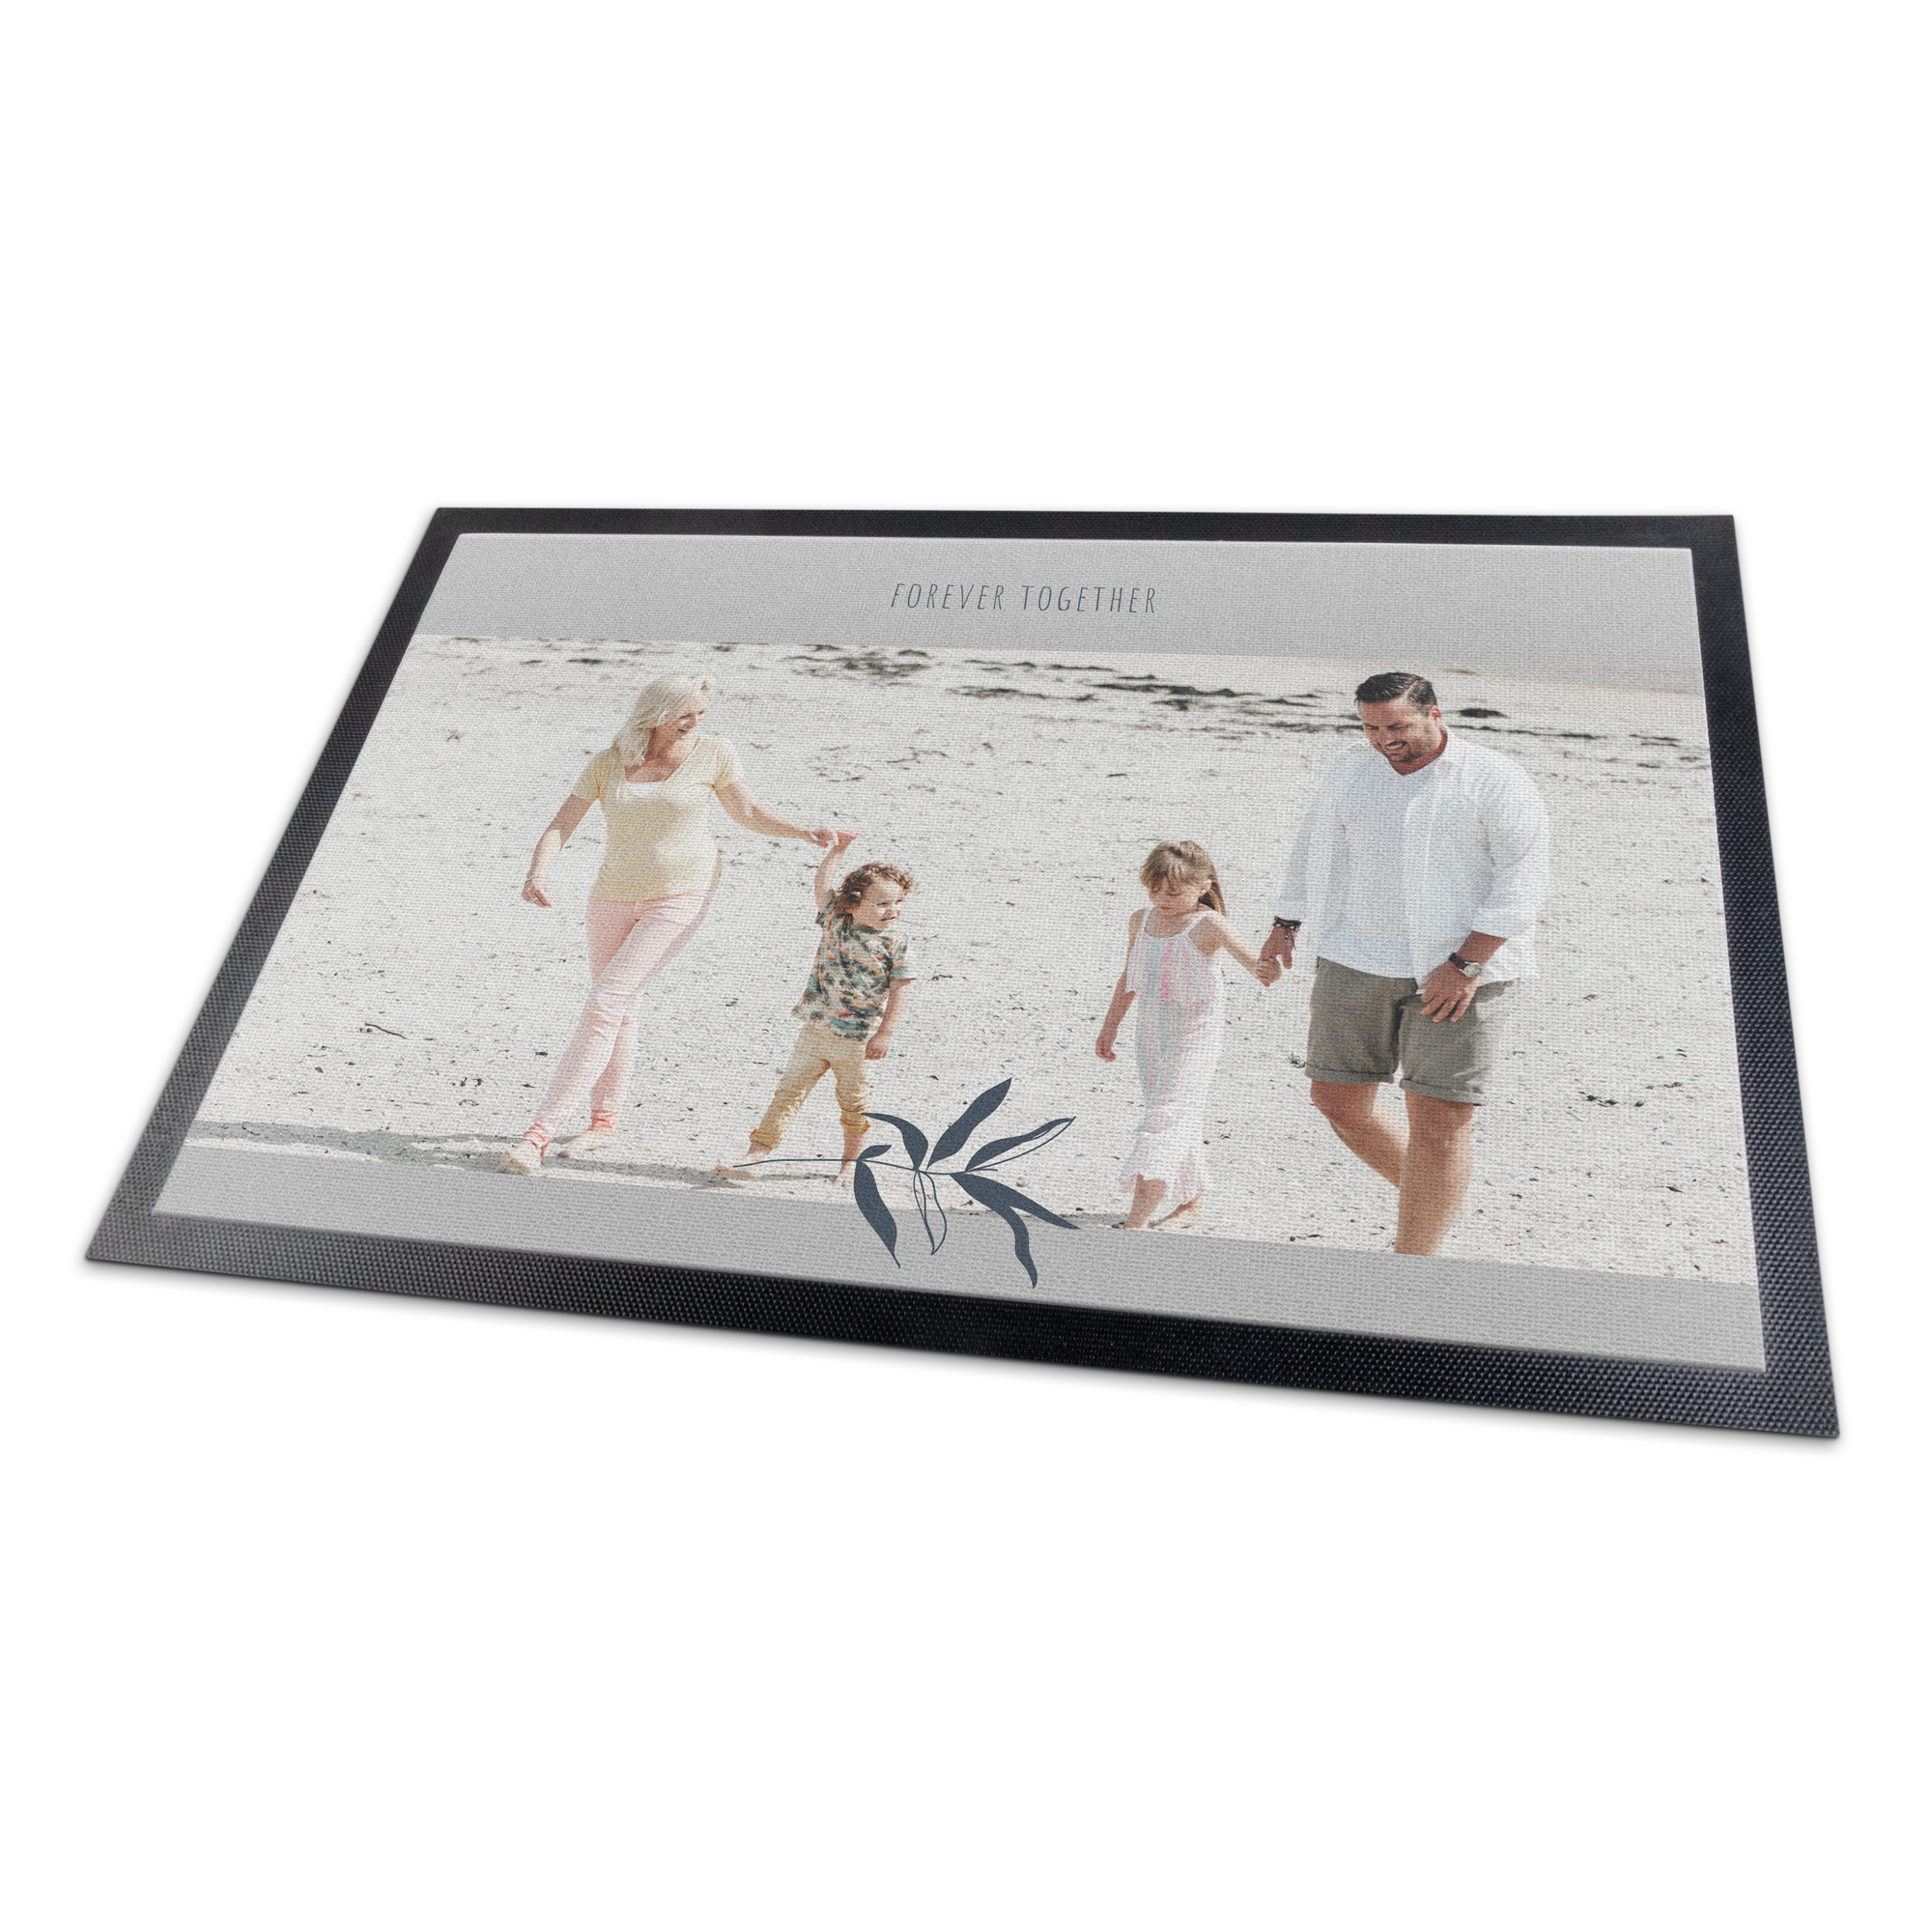 Personalised doormat - 75 x 50 cm